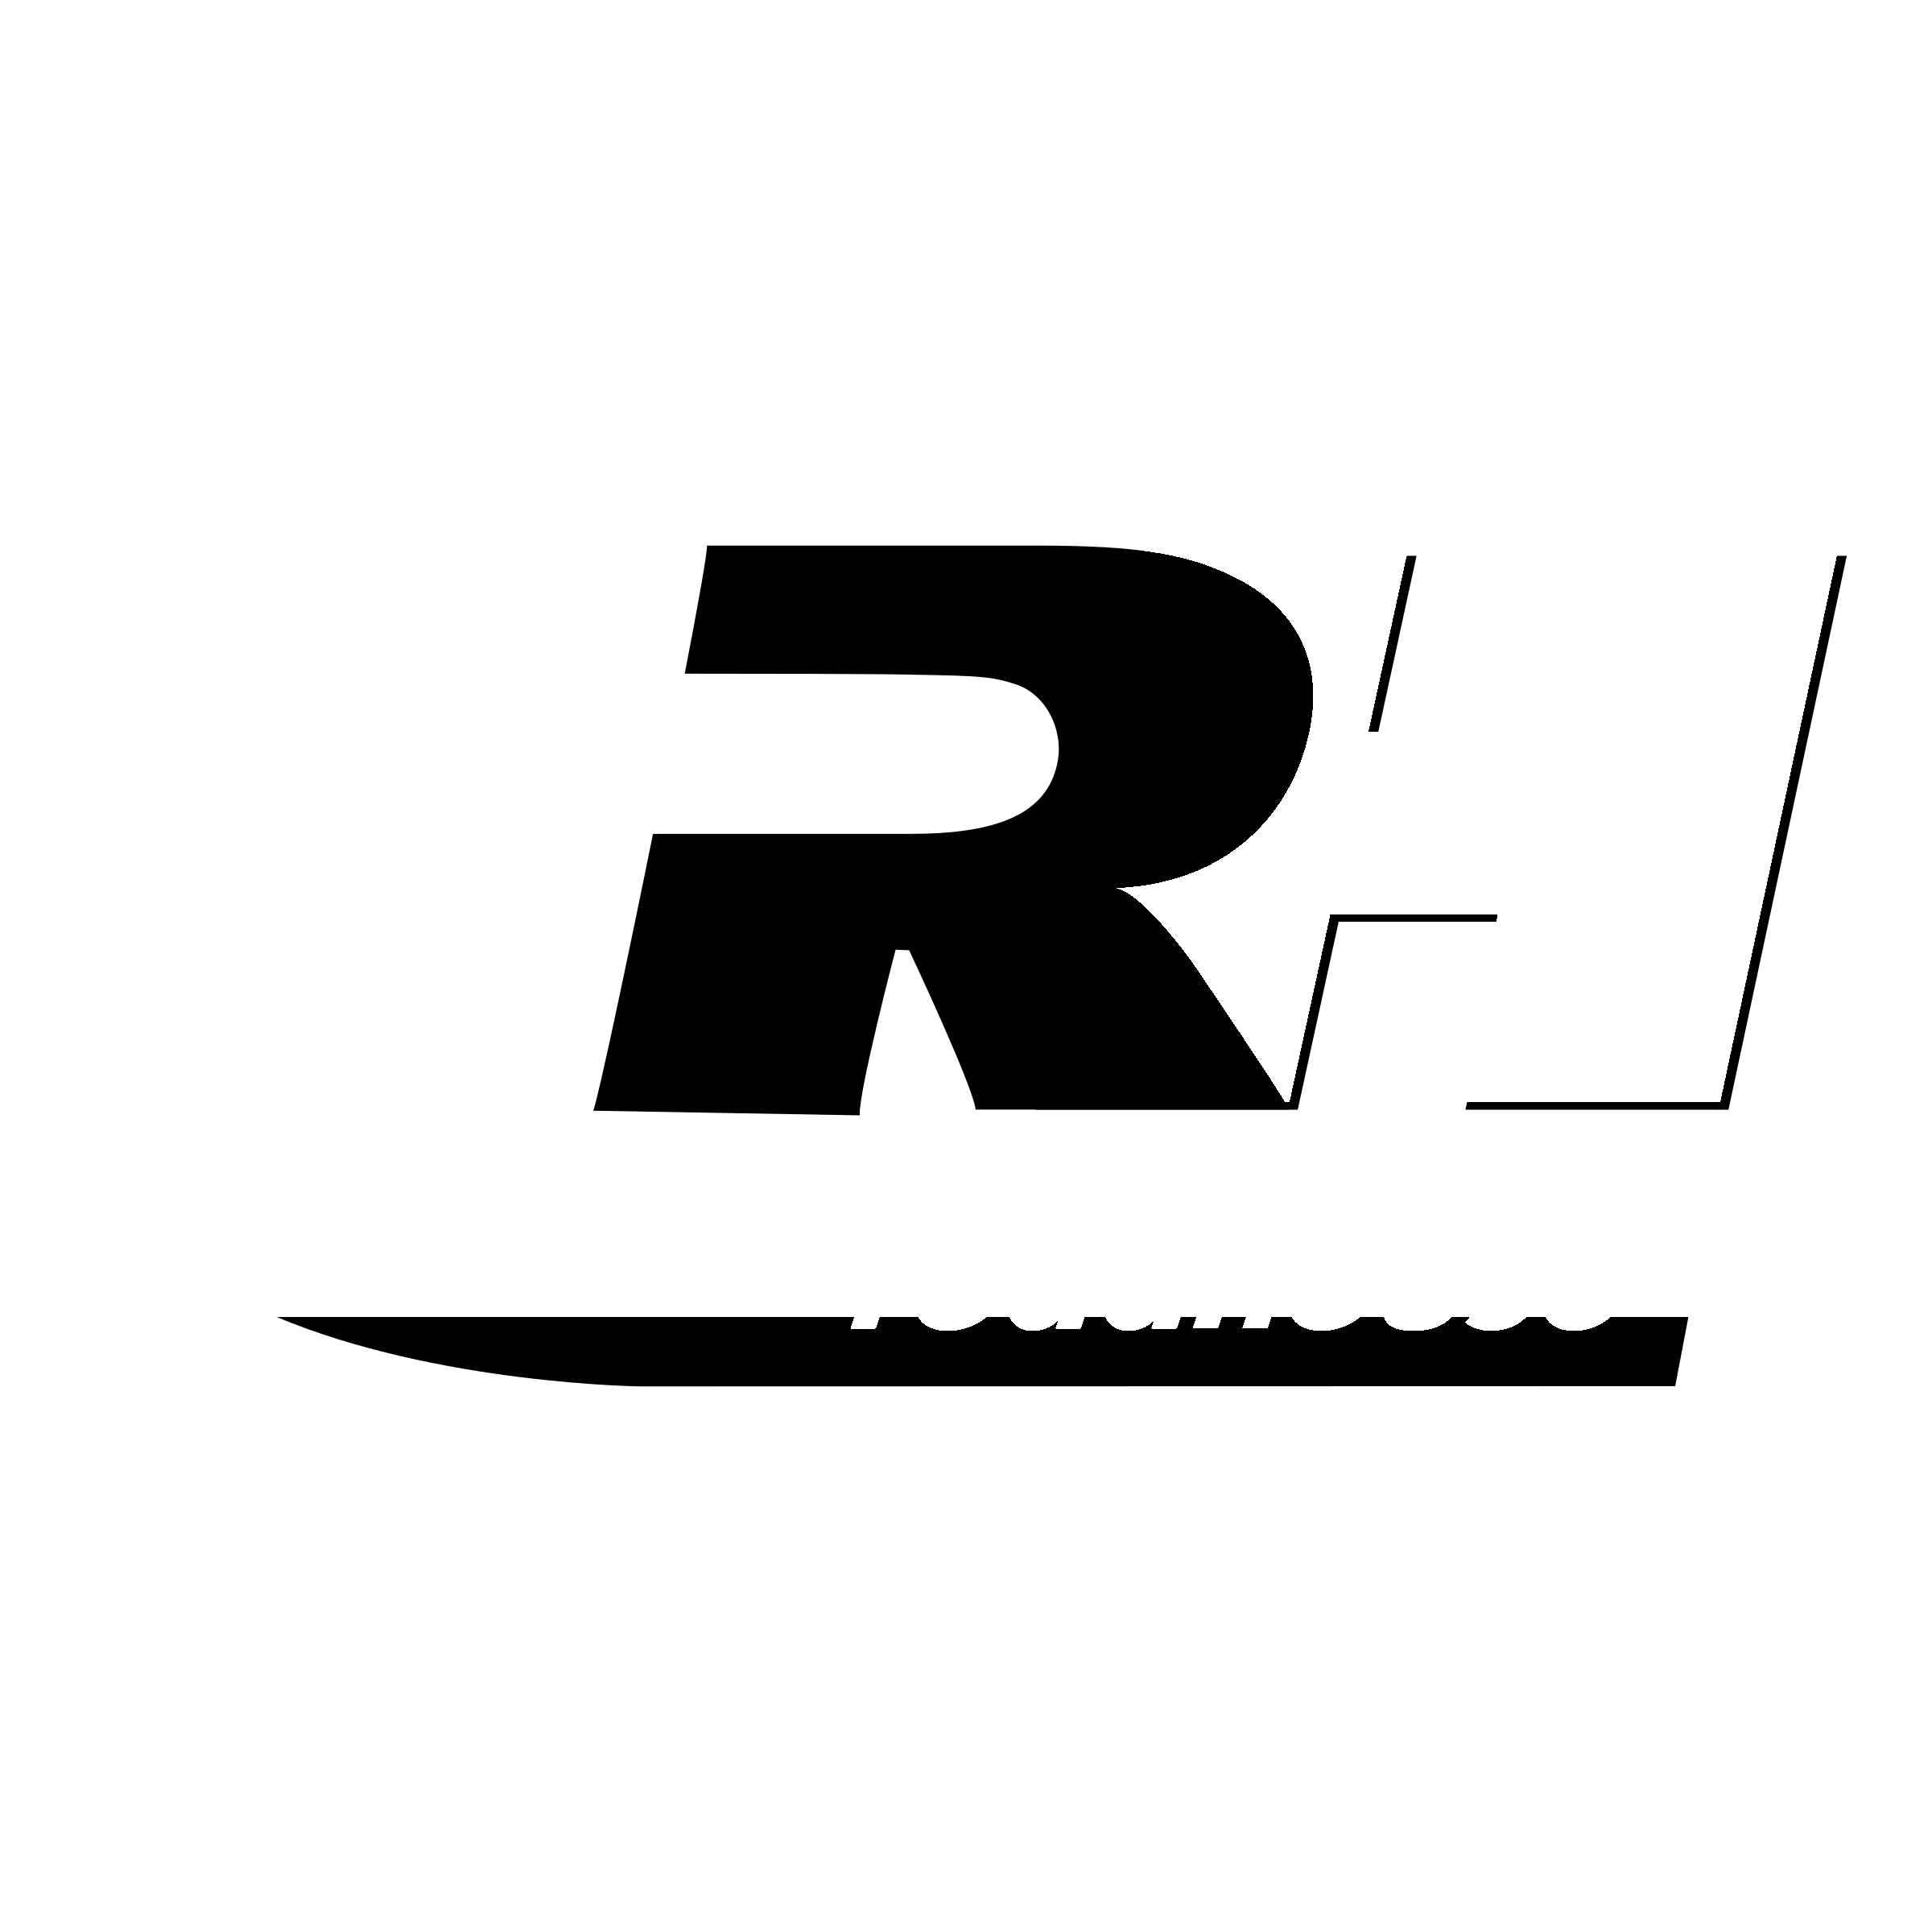 RH Logo - RH Logo PNG Transparent & SVG Vector - Freebie Supply